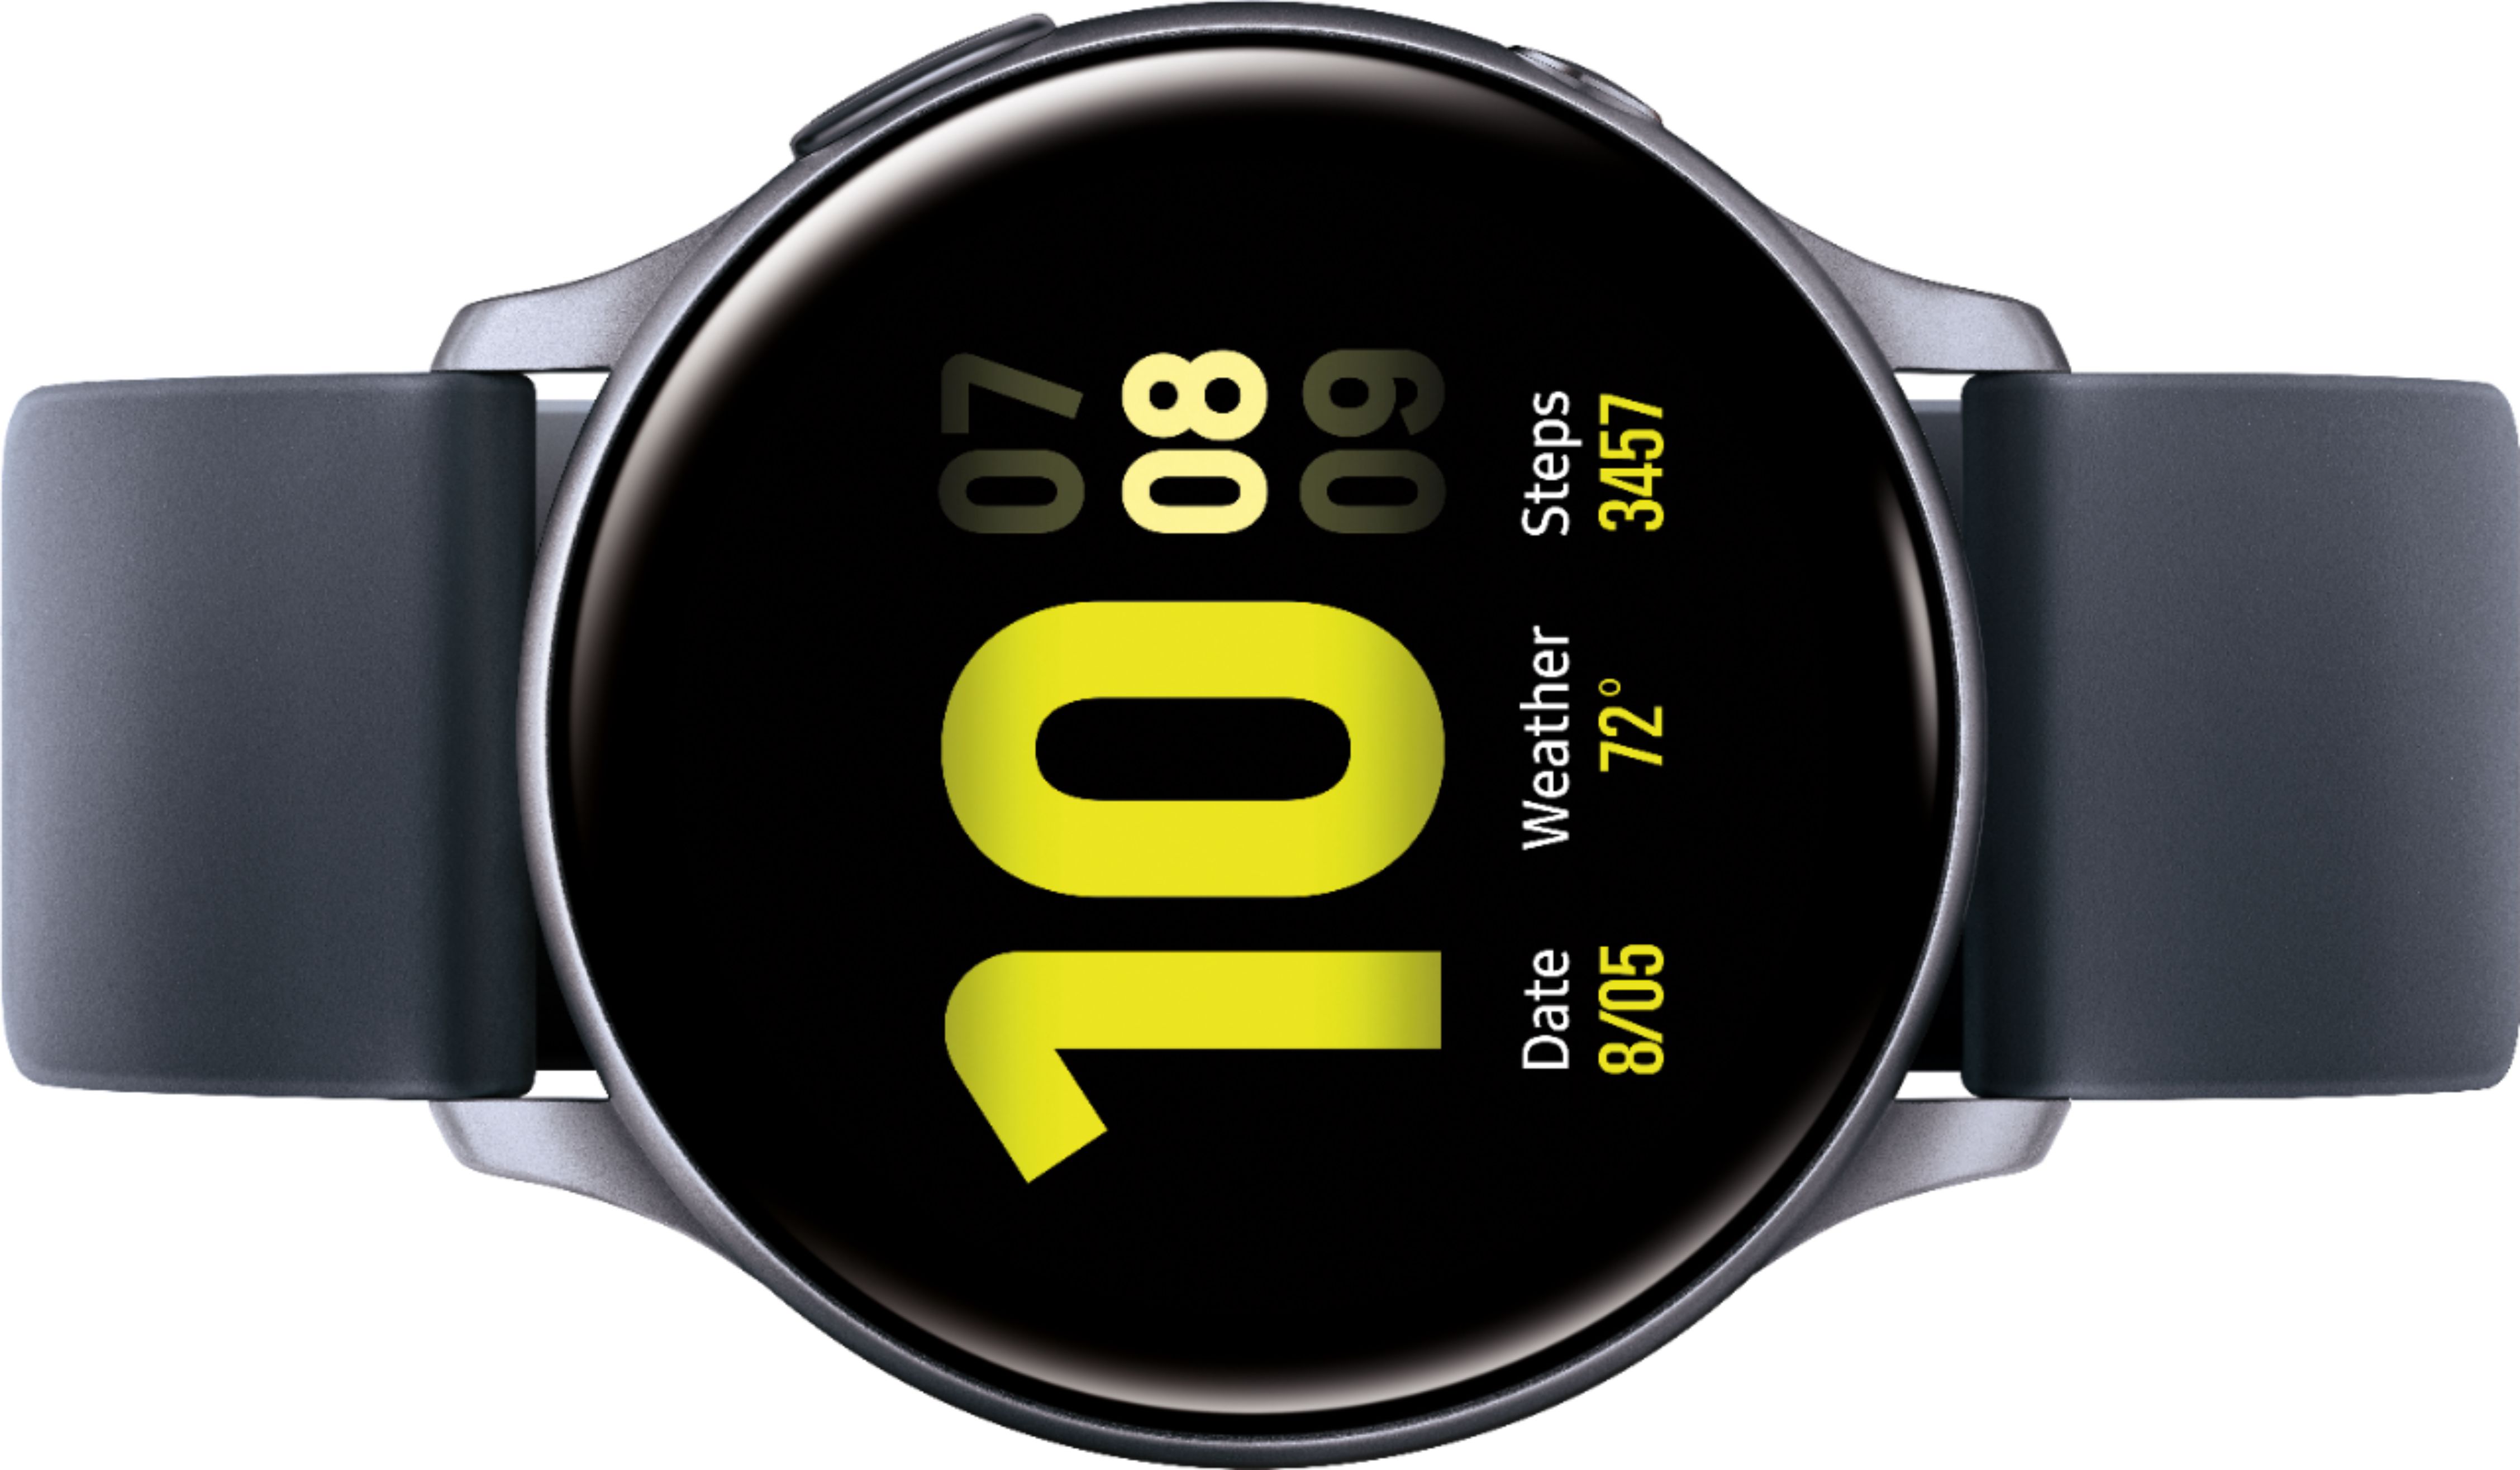  Samsung Galaxy Watch Active2 Bluetooth Smartwatch, Aluminum,  44mm, Black (SM-R820NZKCXAR) (Renewed) : Electronics